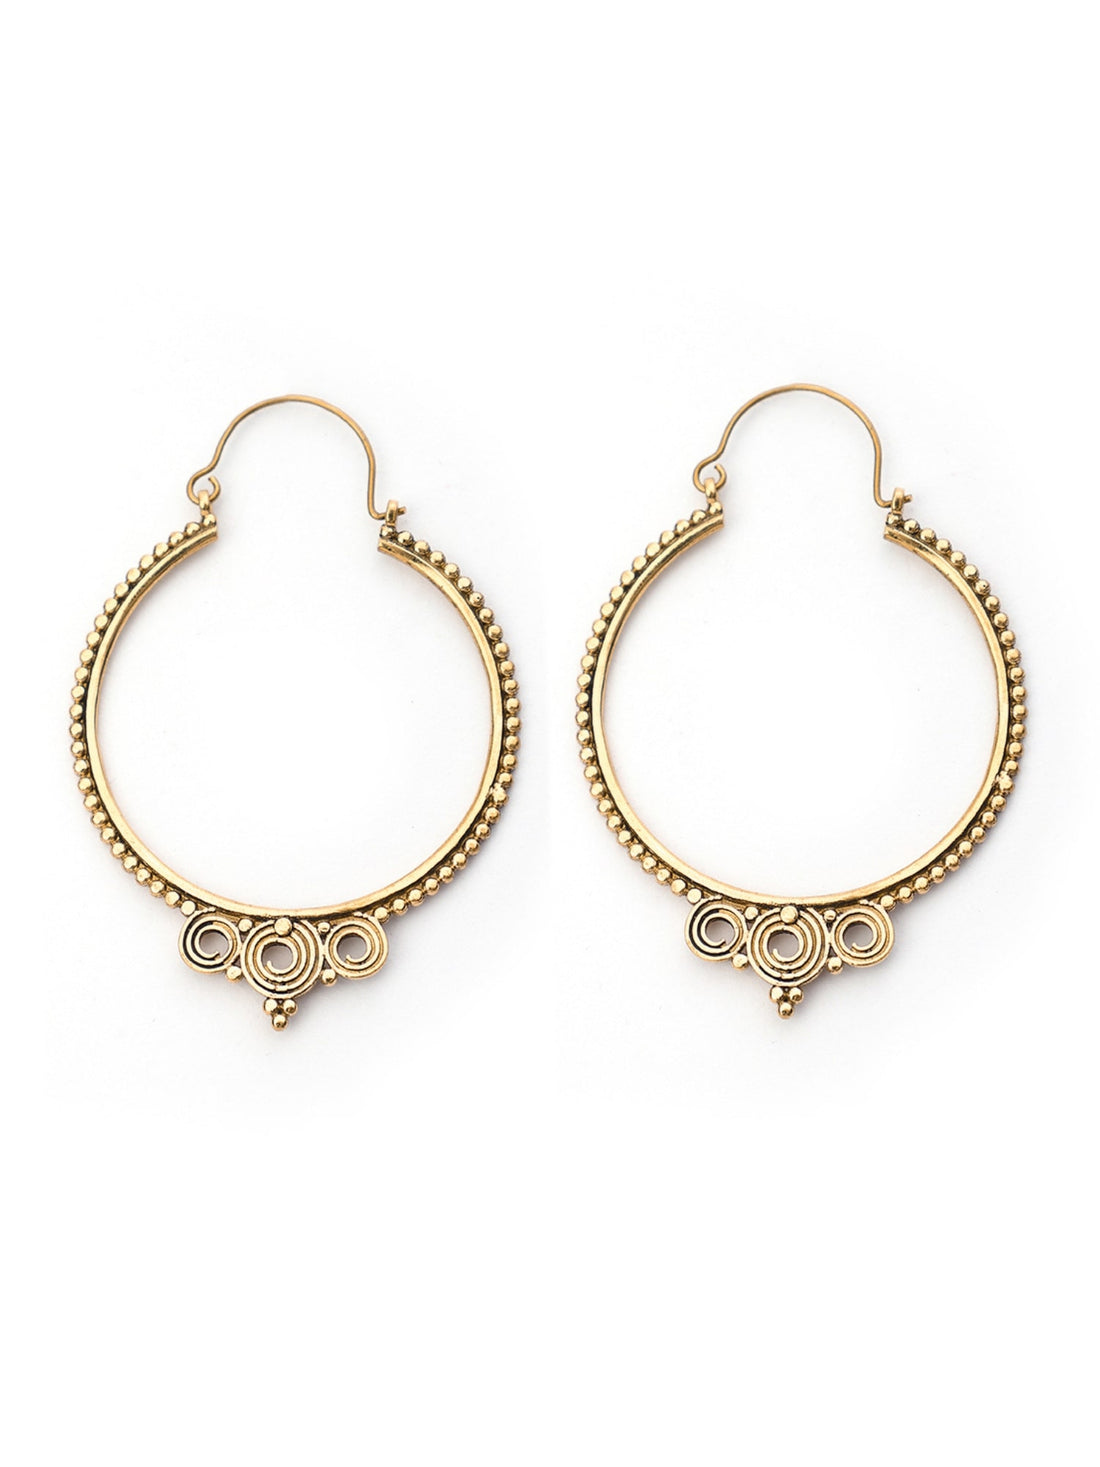 Daily Wear Hoops Earrings - Traditional Gold-Plated Brass Earrings By Studio One Love